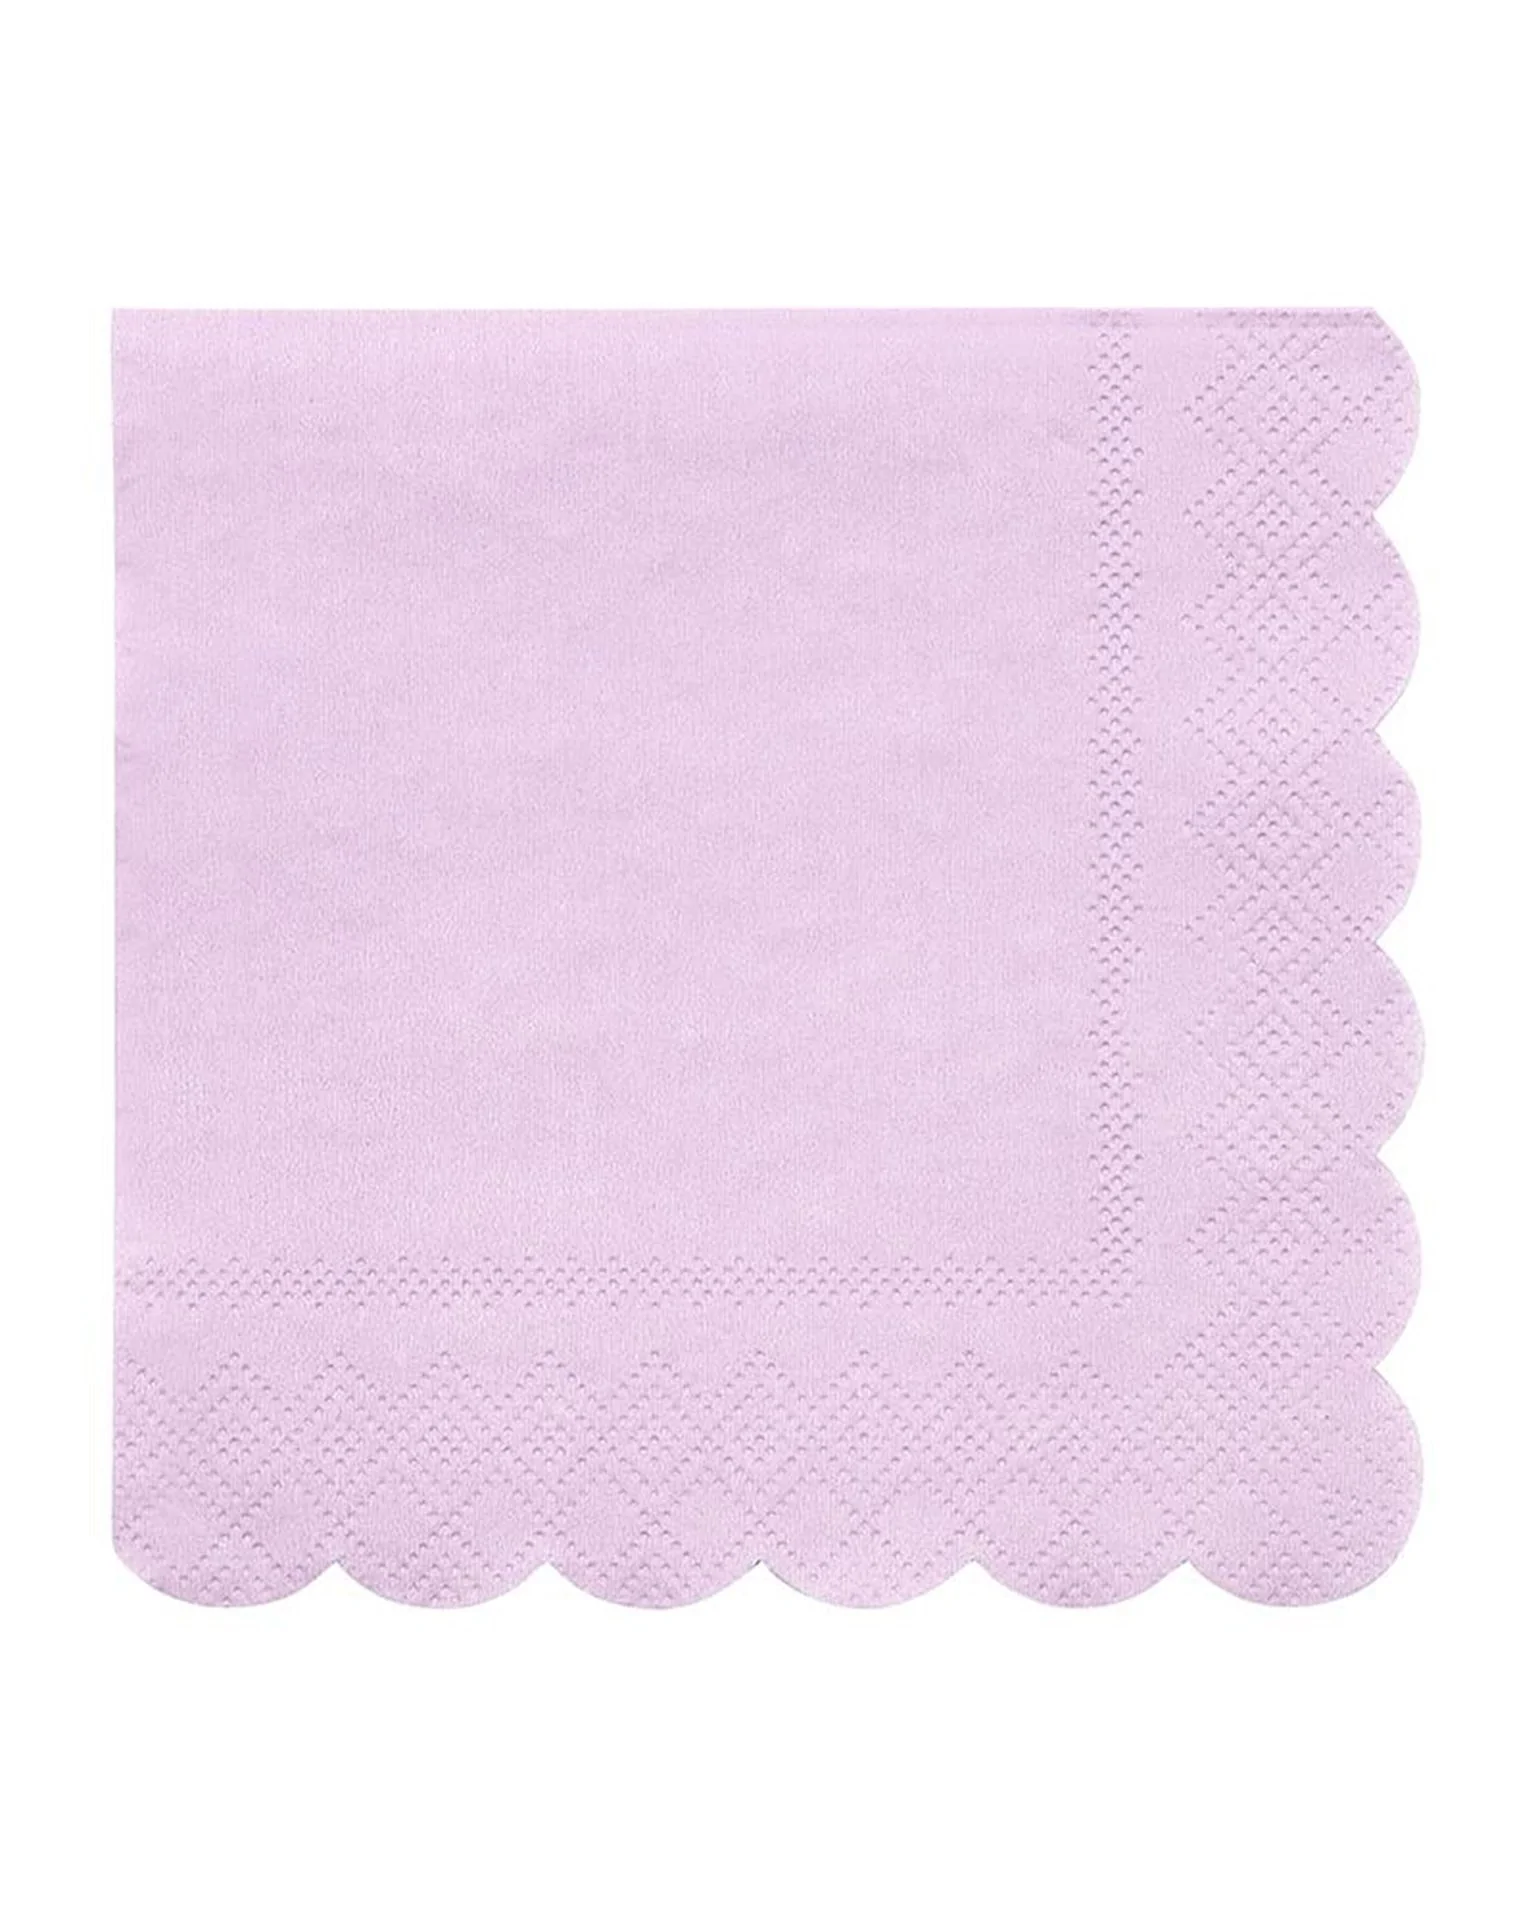 meri meri lilac napkins, small